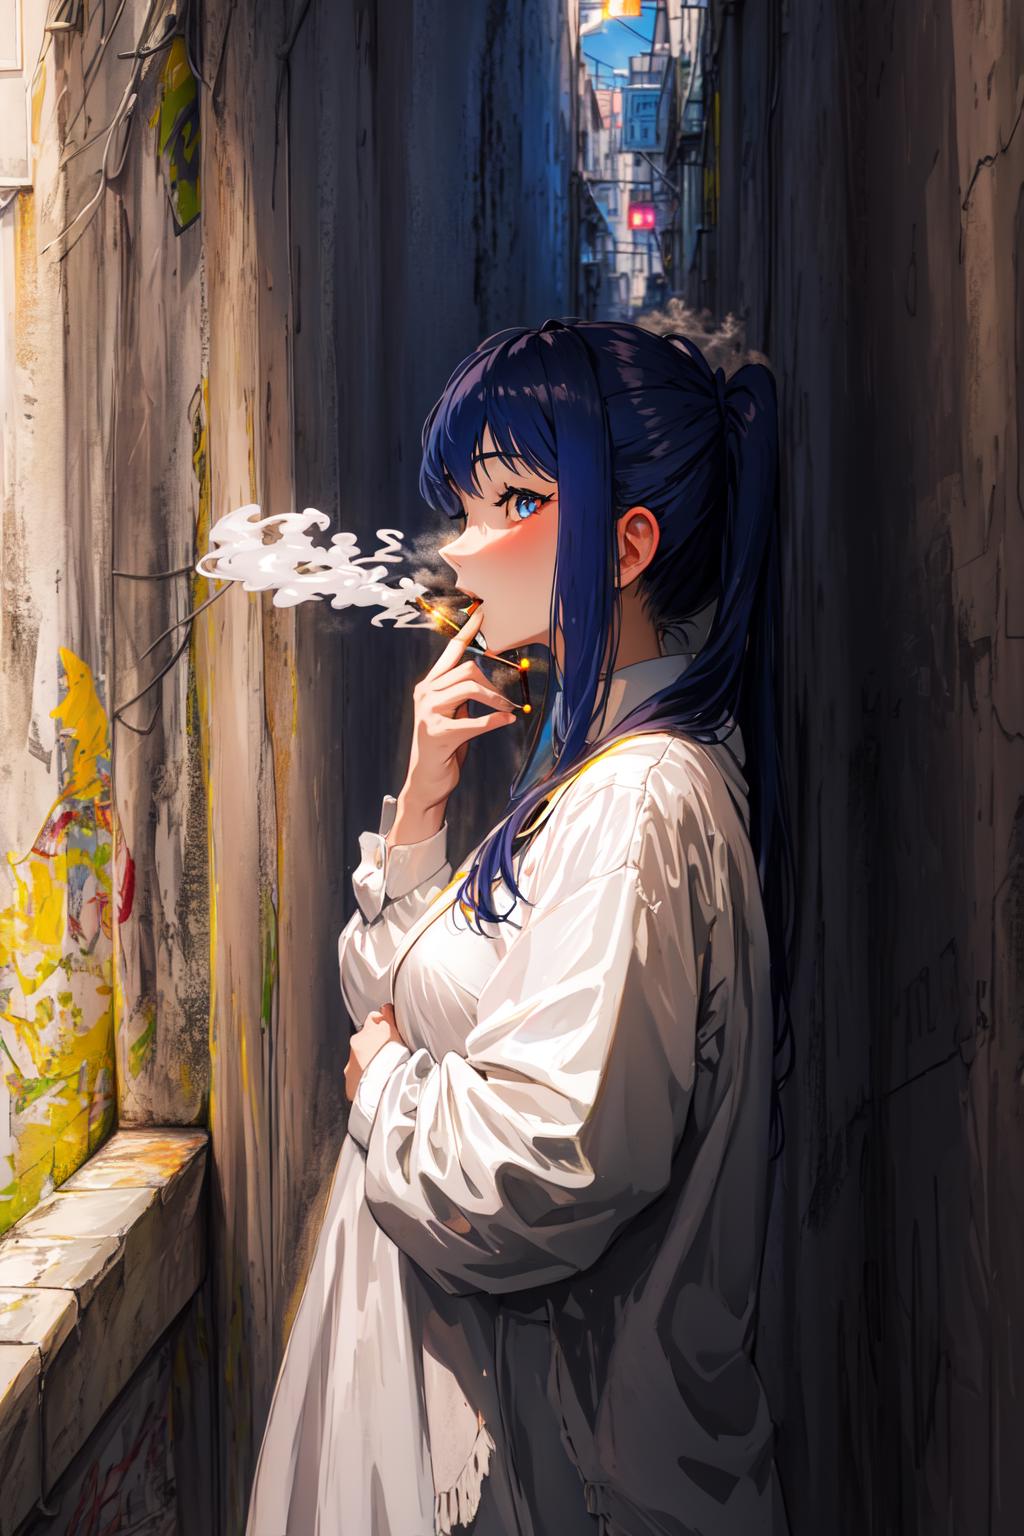 [Concept]Smoking image by Eisthol